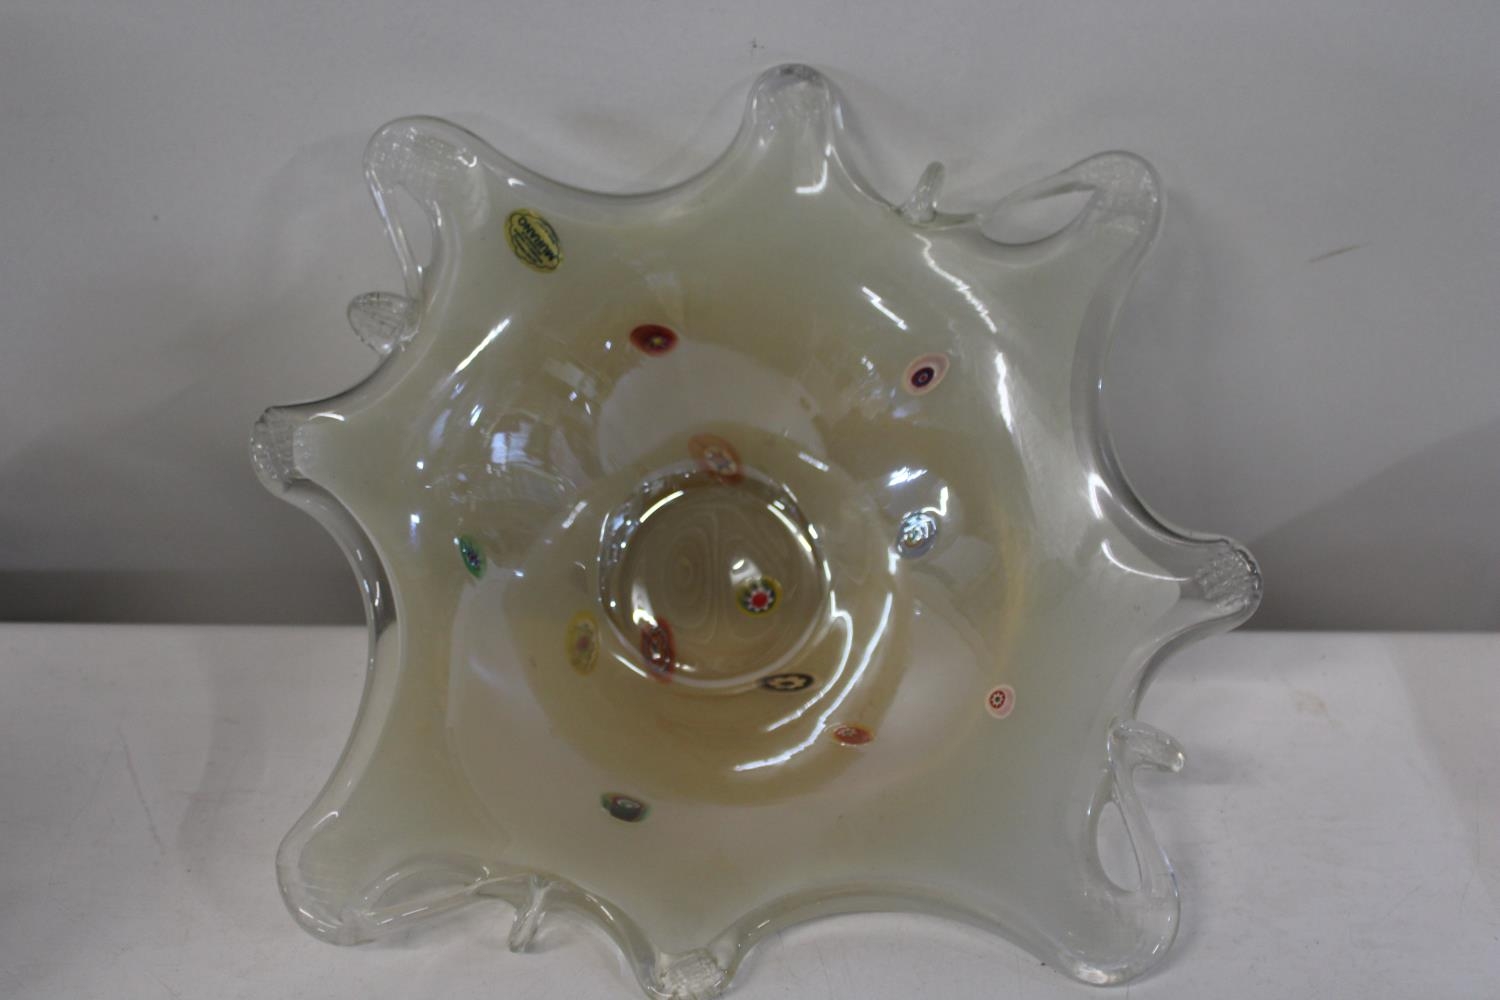 A large Murano glass table center piece bowl dia. 38cm